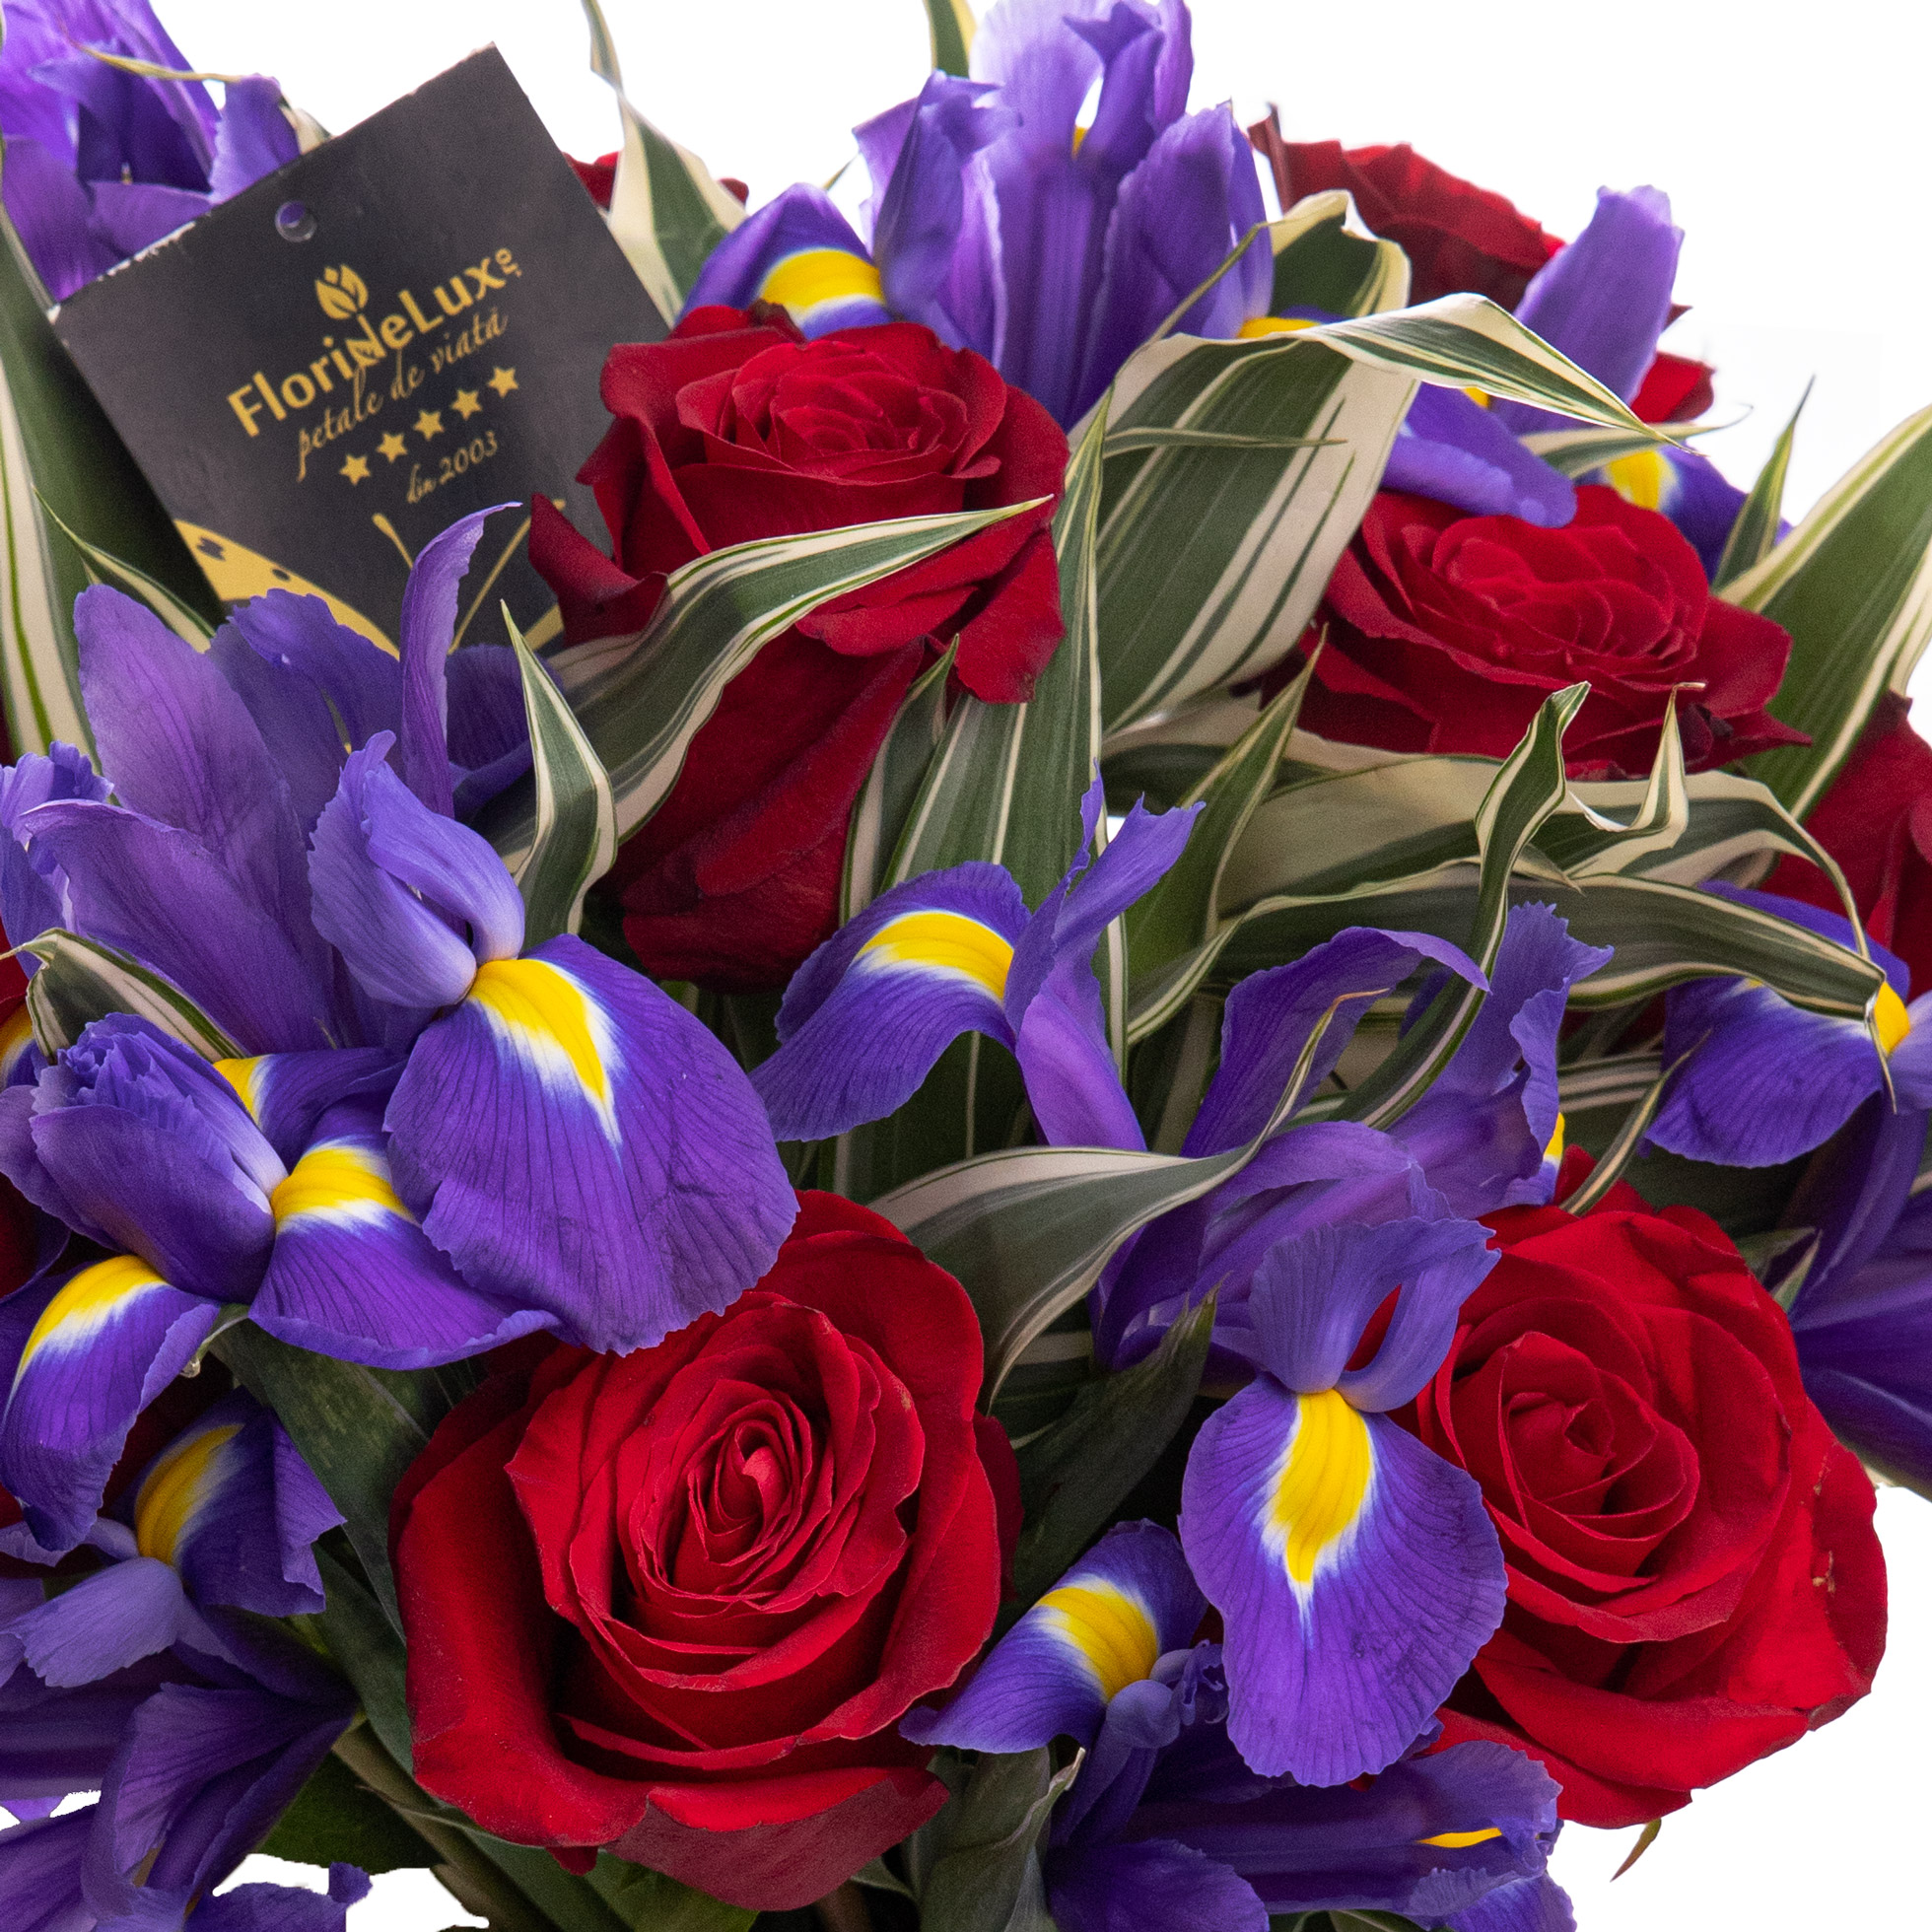 Irisi albastri si trandafiri rosii